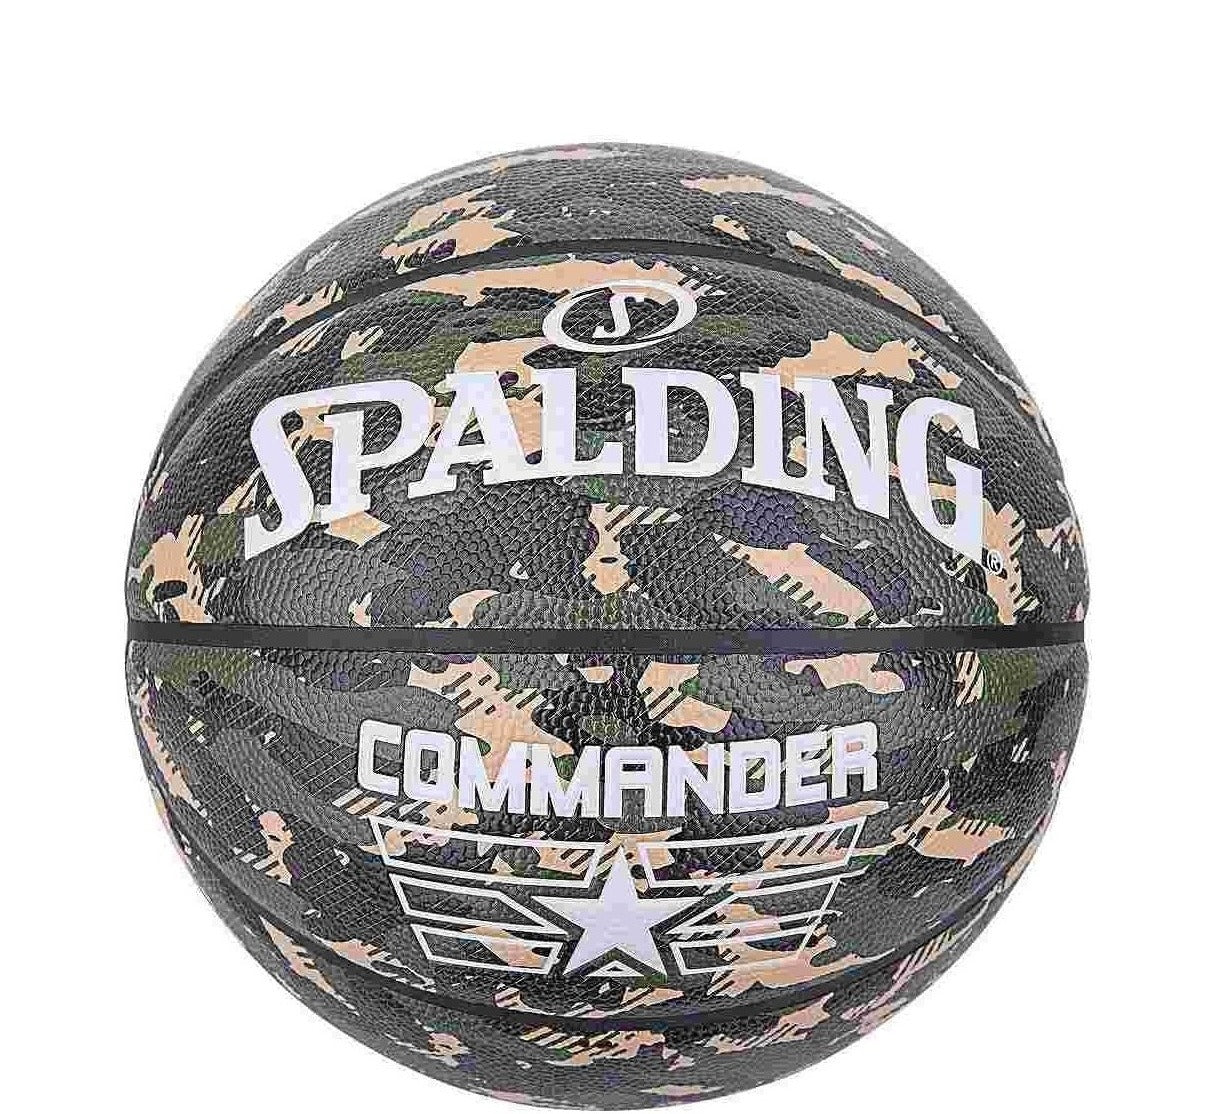 Balón de baloncesto - Balones - Tienda online - Anches Sports